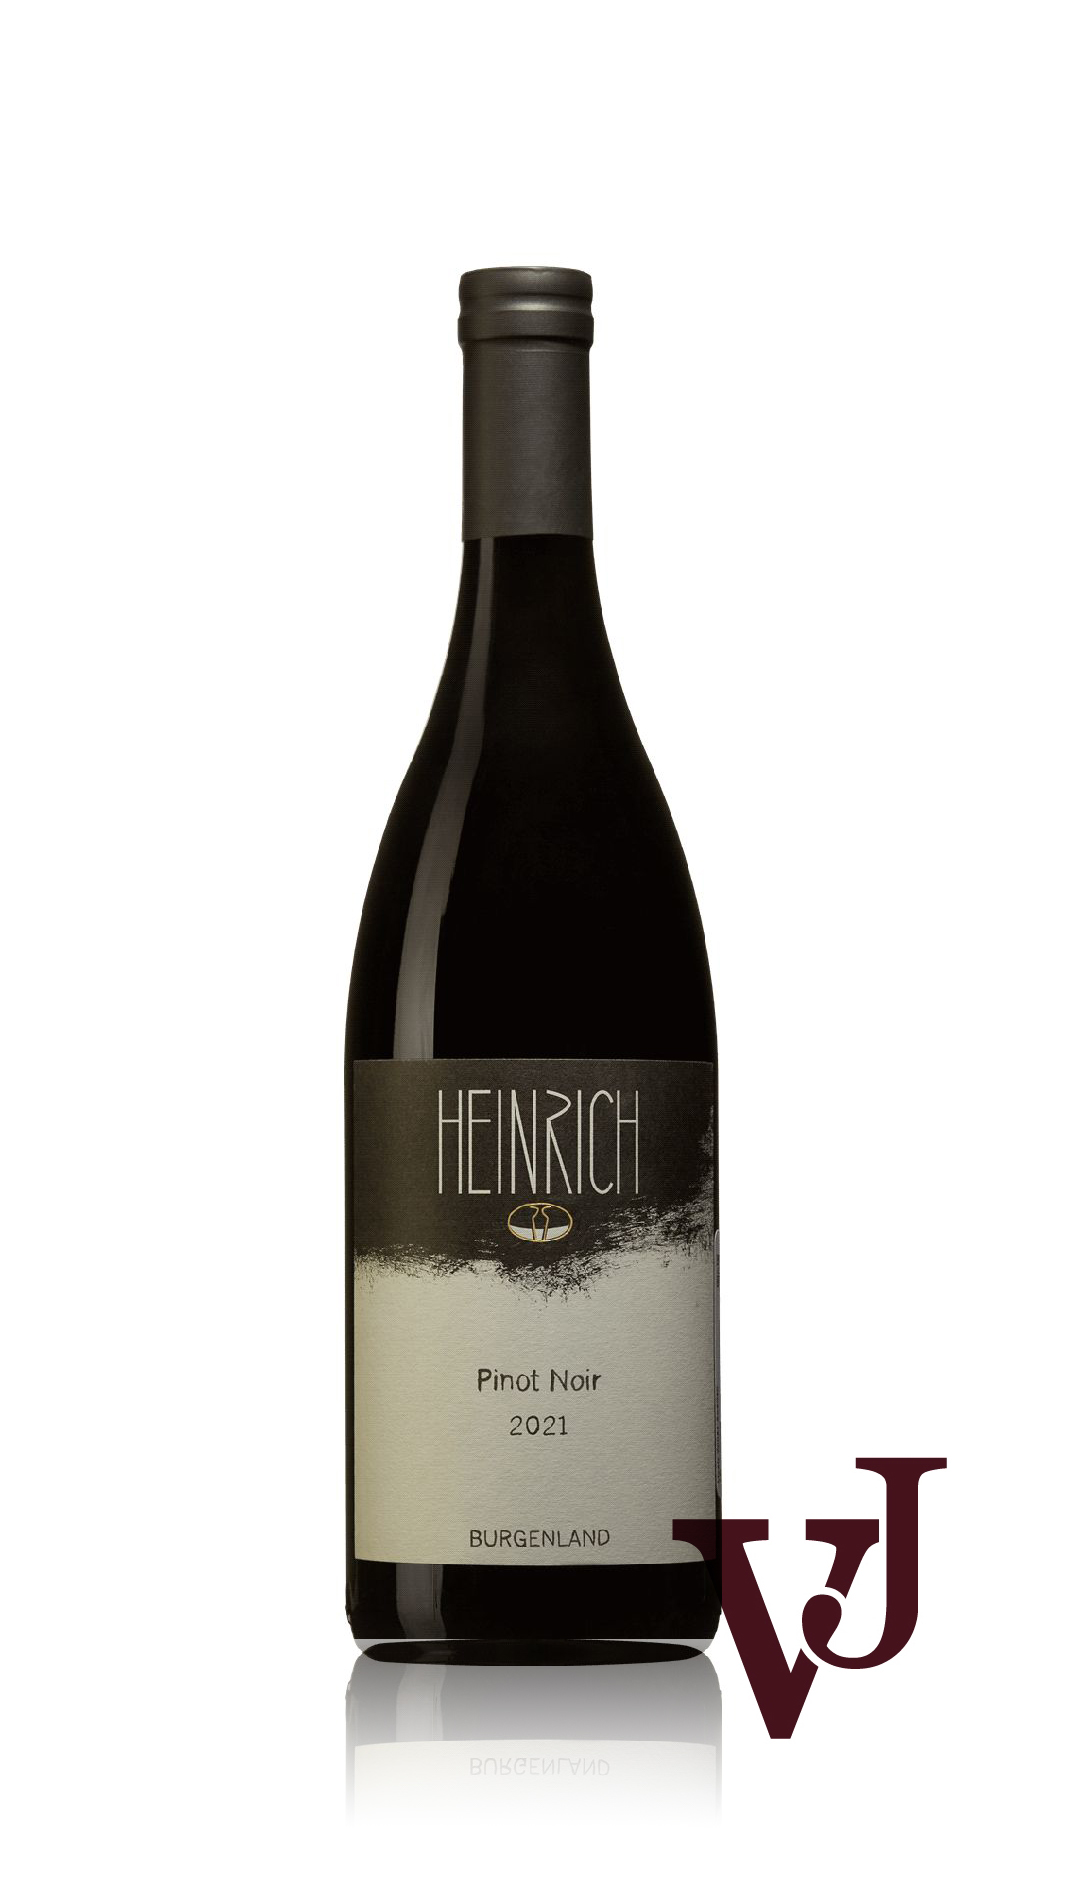 Rött Vin - Heinrich Pinot Noir Weingut Heinrich artikel nummer 9528001 från producenten Weingut Heinrich från området Österrike